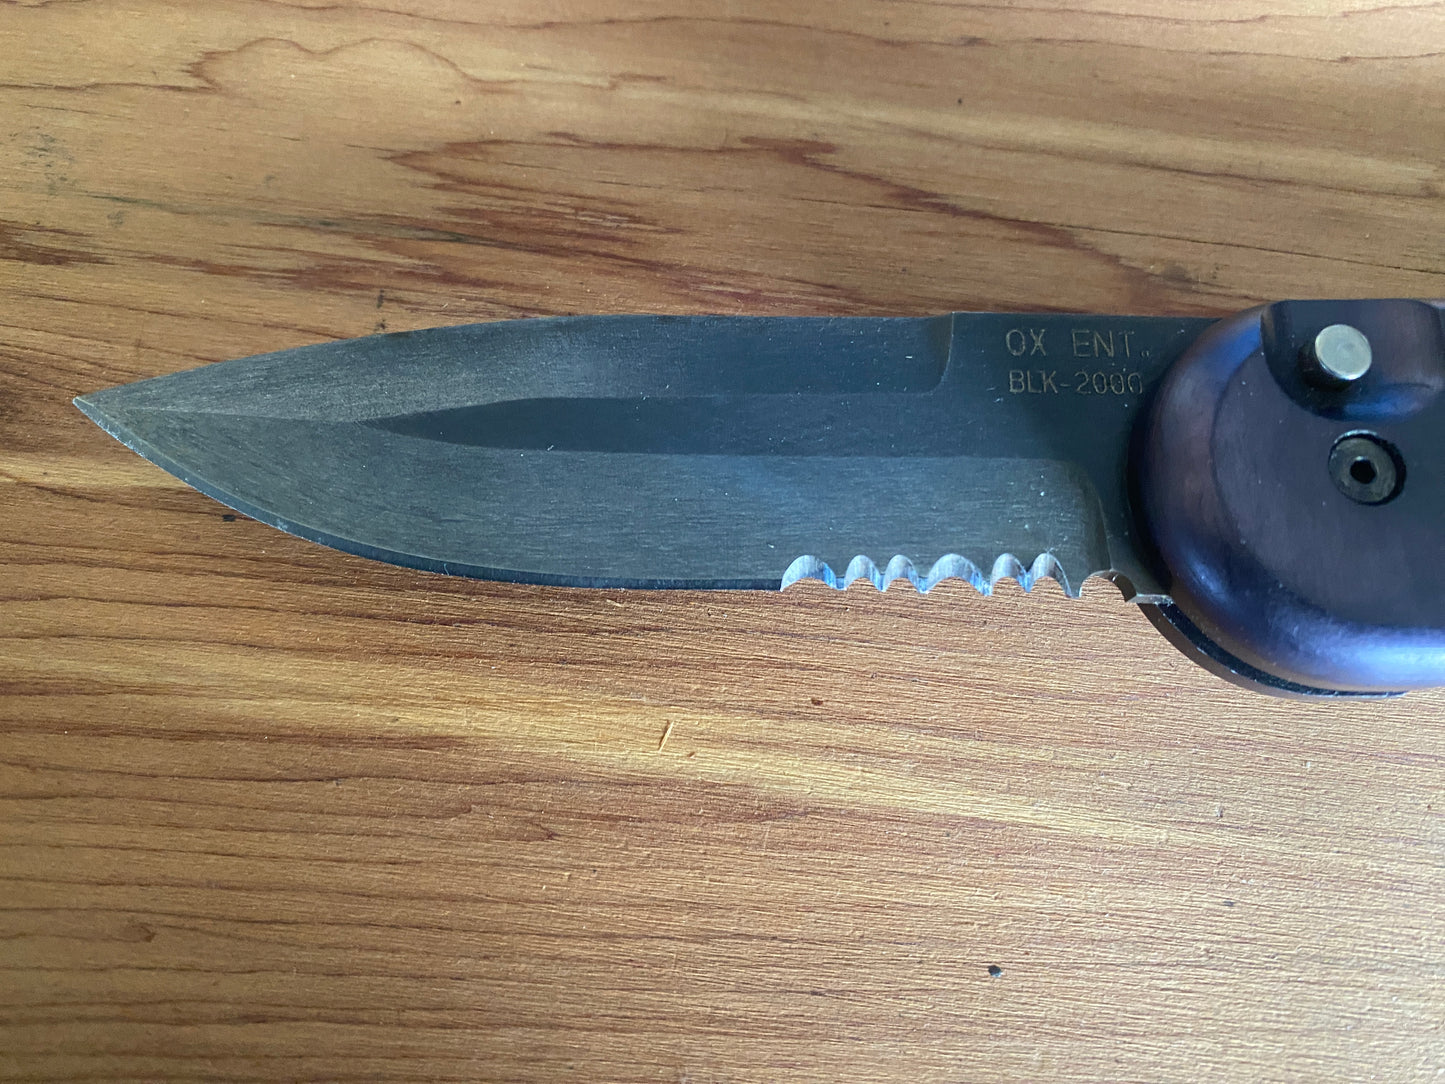 Ox Forge Black knife BLK-2000 Automatic pocket knife